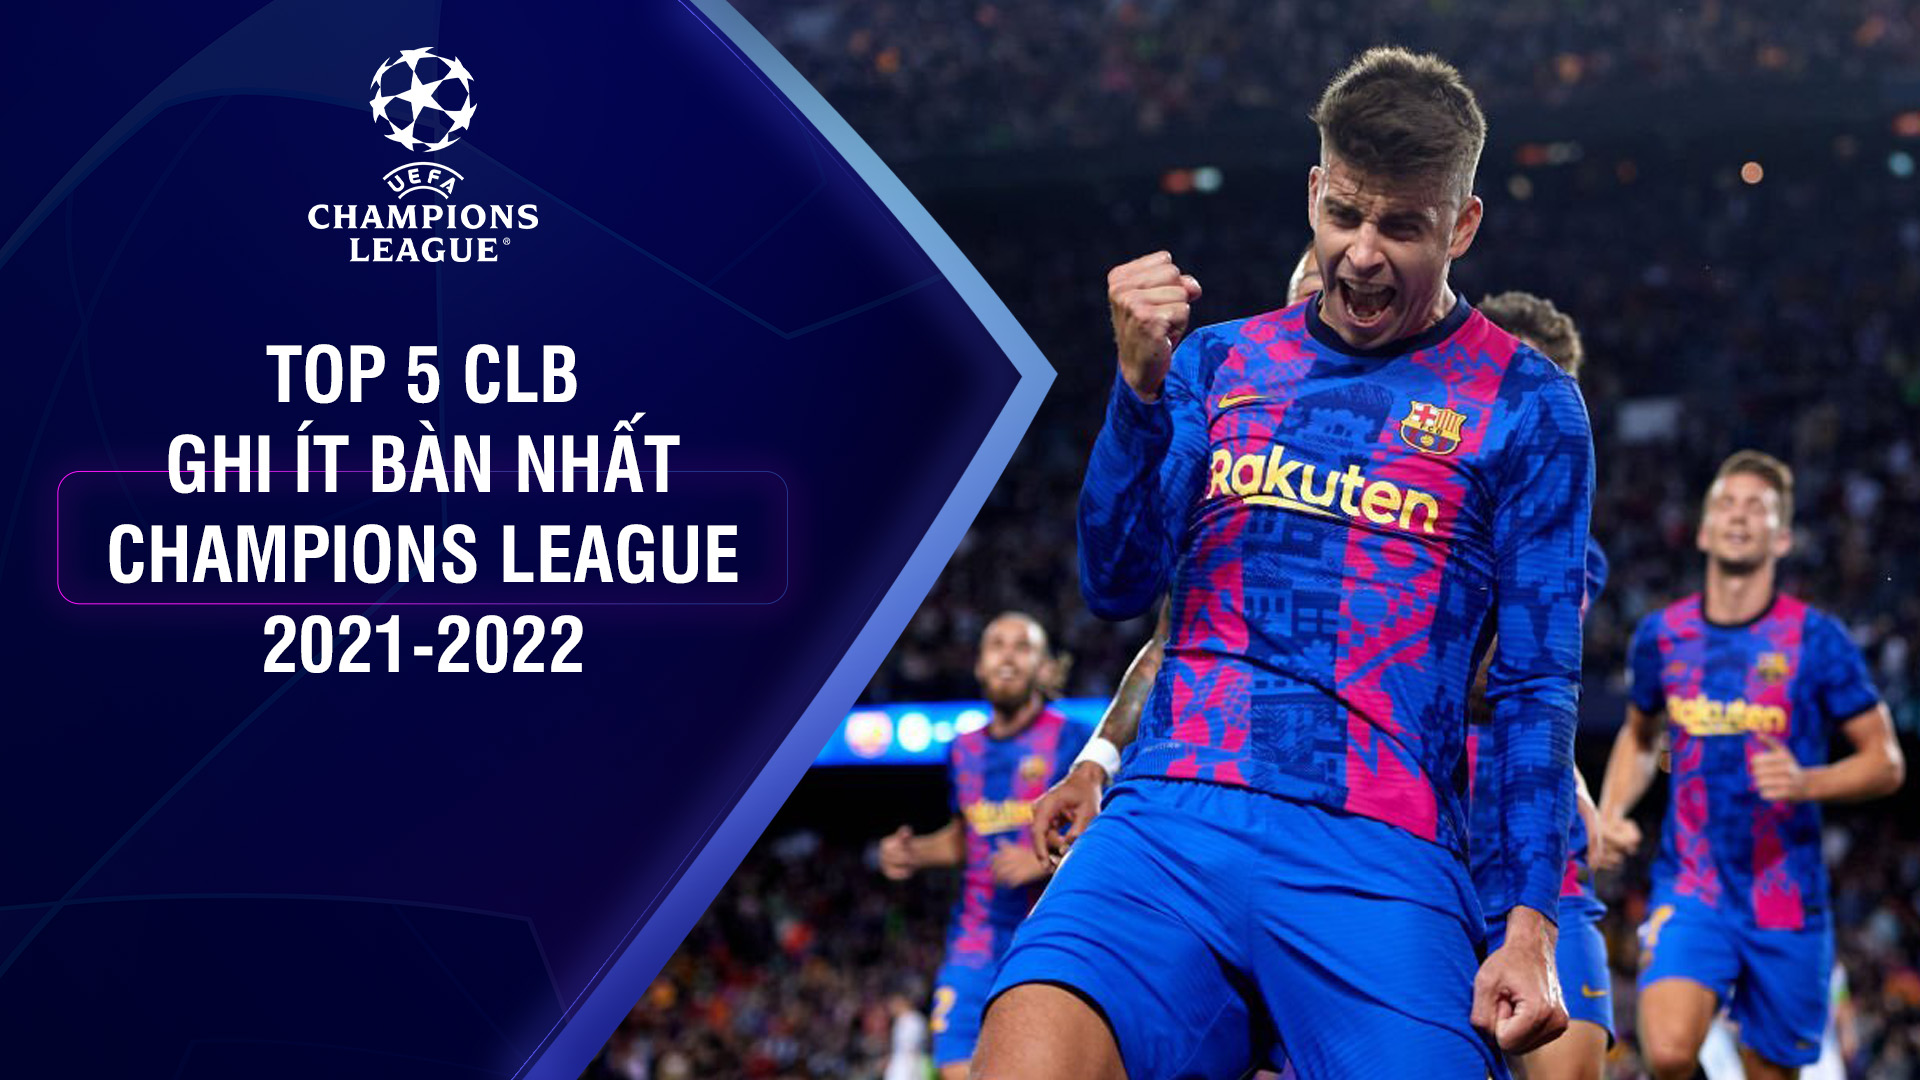 TOP 5 CLB ghi ít bàn nhất Champions League 2021/2022 - UEFA Champions League